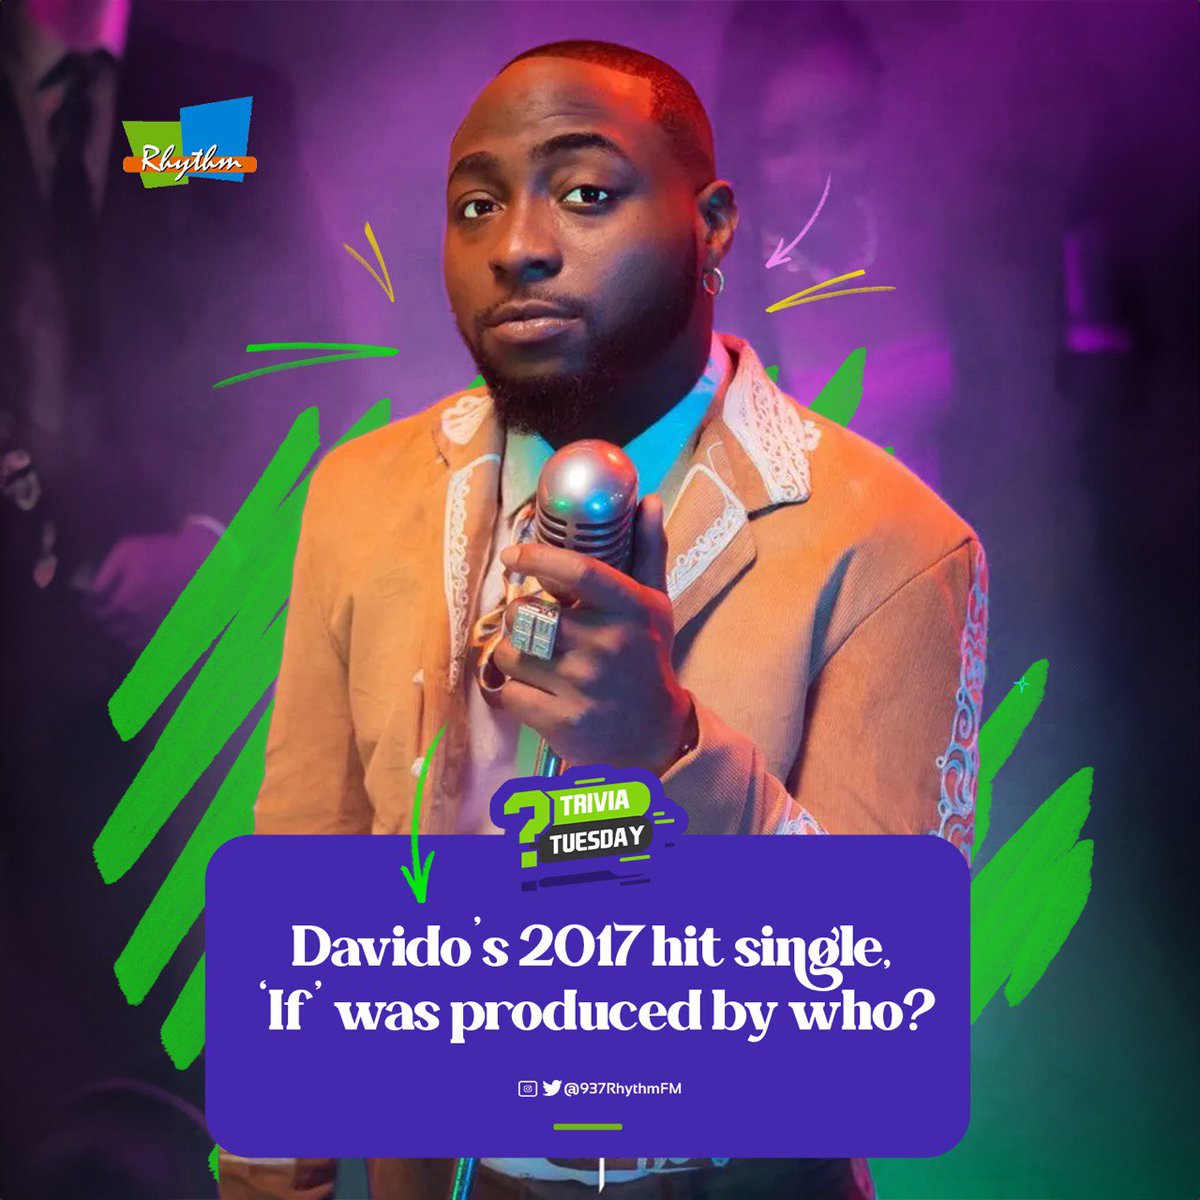 #TuesdayTrivia 

Who produced Davido’s 2017 global hit single, ‘If’?